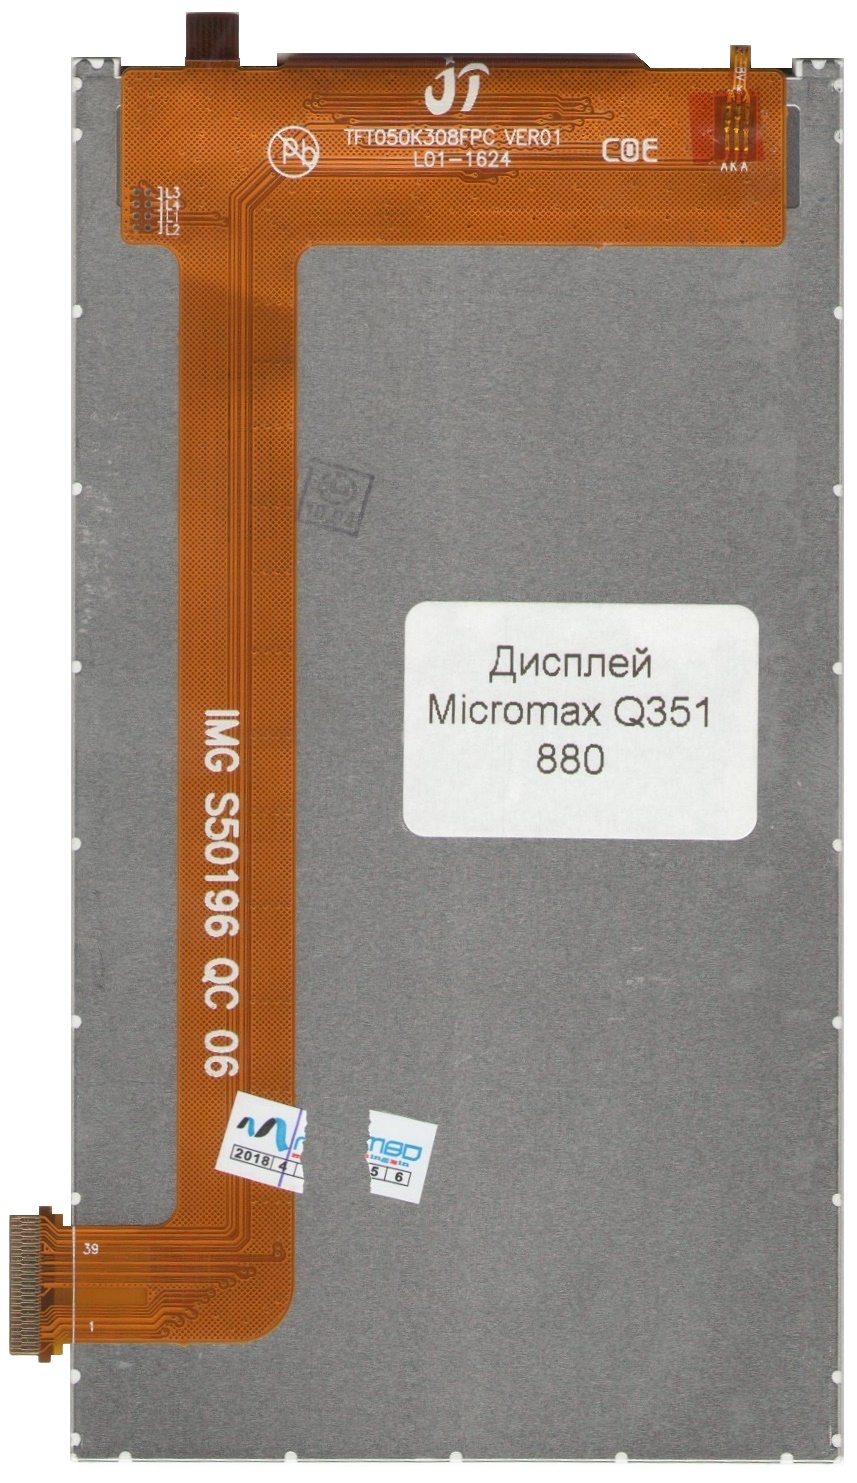 Дисплей Micromax Q351